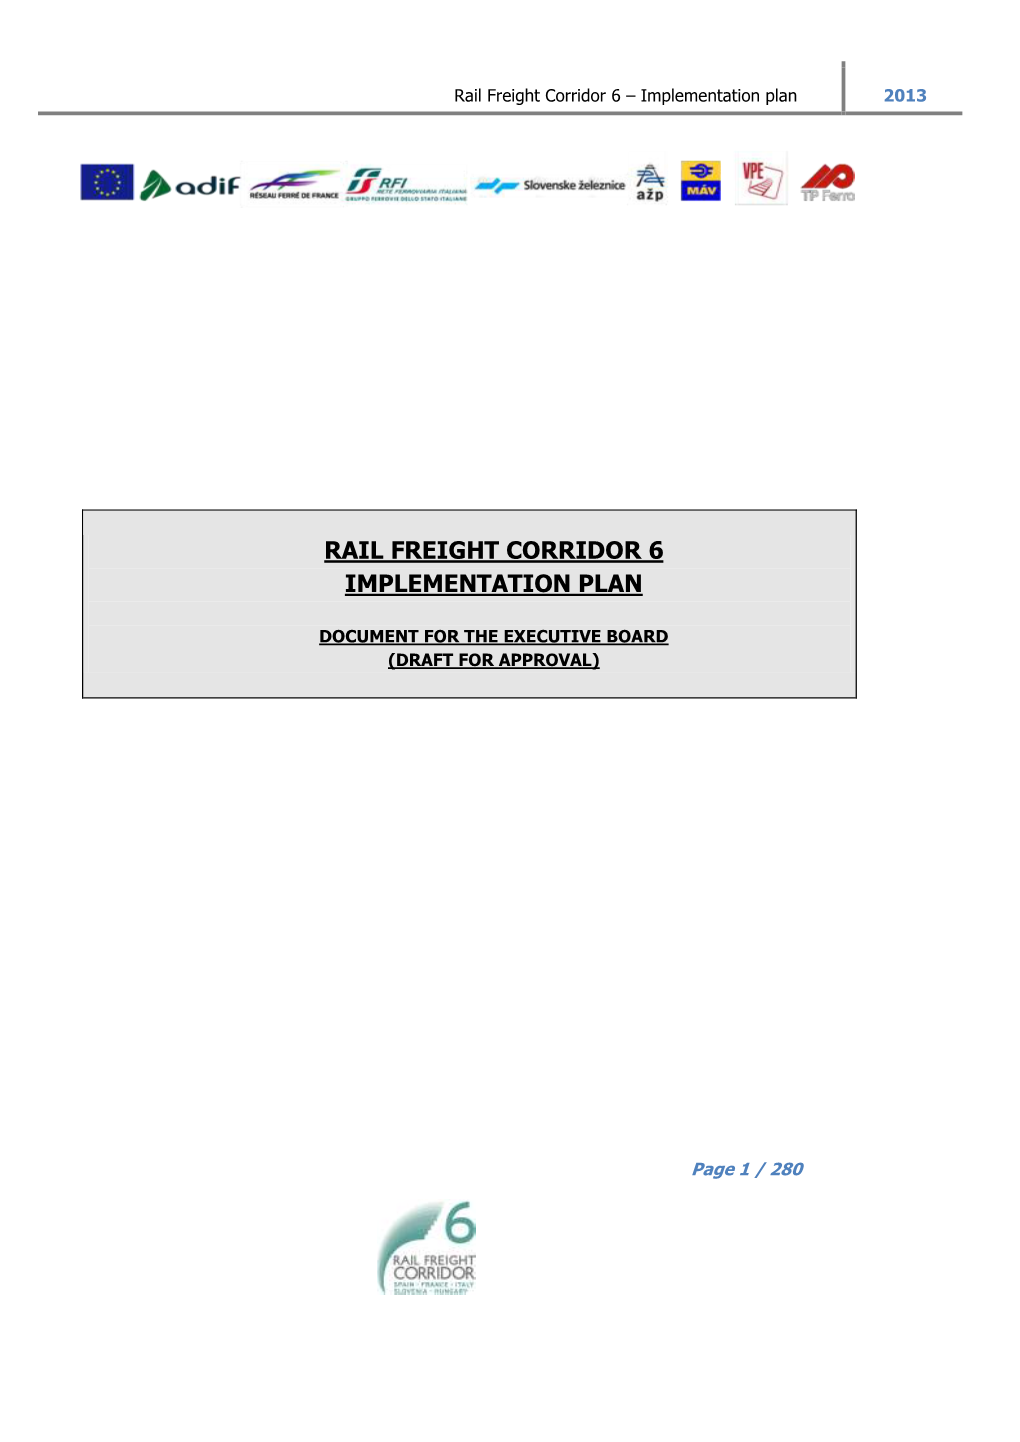 Rail Freight Corridor 6 Implementation Plan